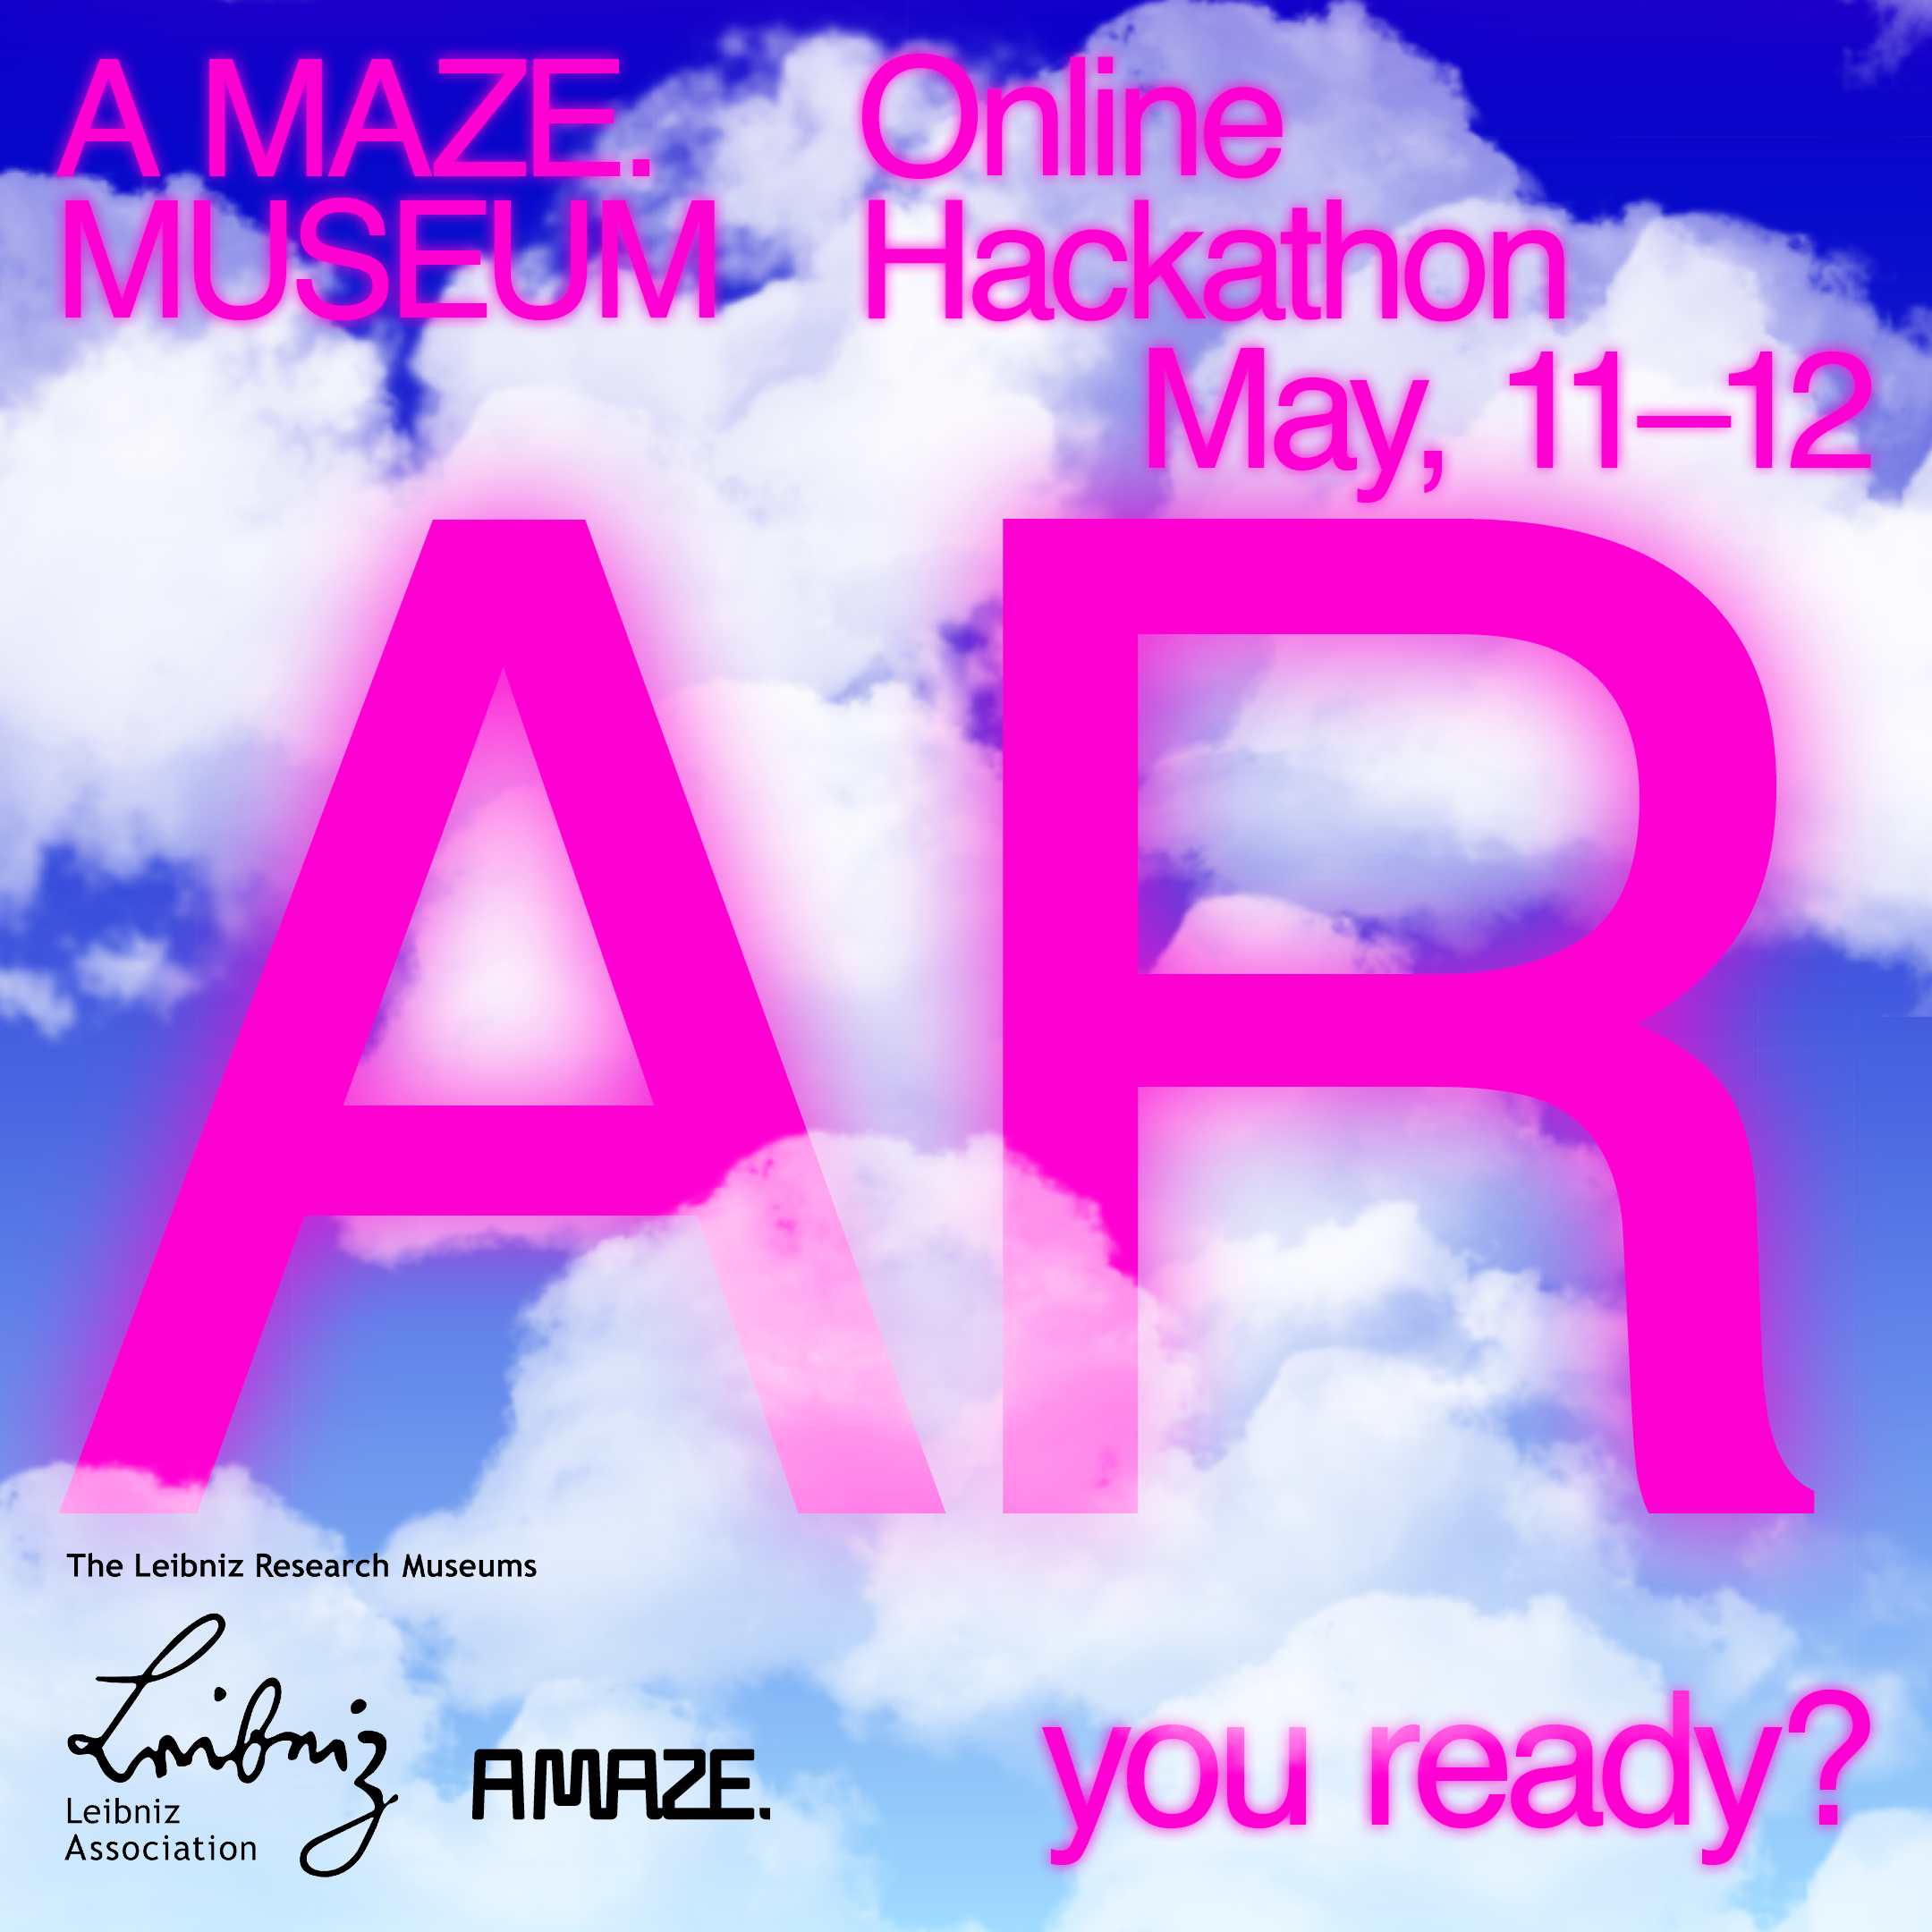 A MAZE. Museum Online Hackathon is Calling !